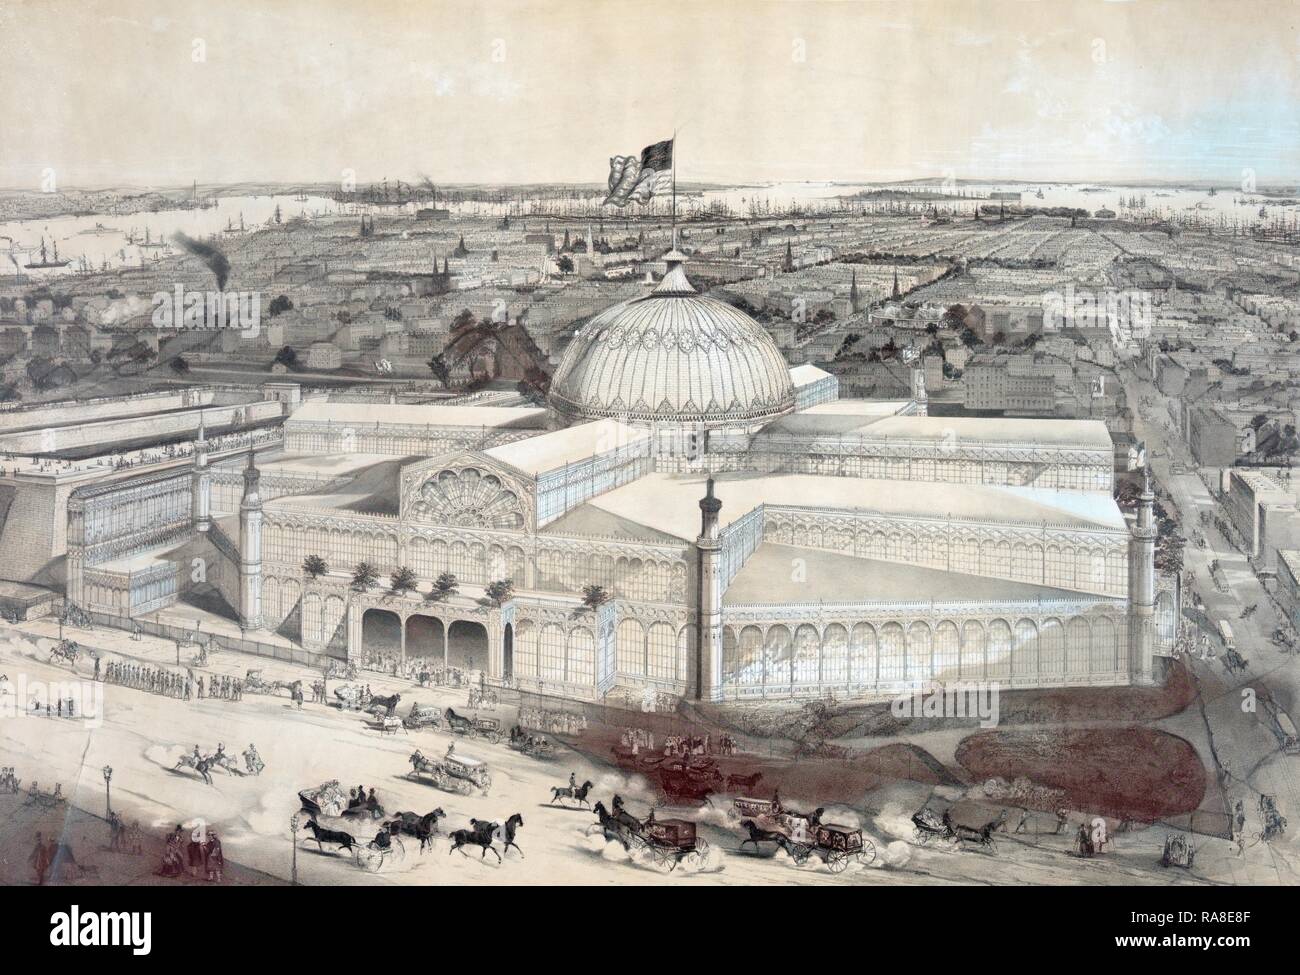 Vögel Auge Ansicht des New York Crystal Palace und Umwelt, 19. Jahrhundert, US, USA, Amerika. Neuerfundene Stockfoto